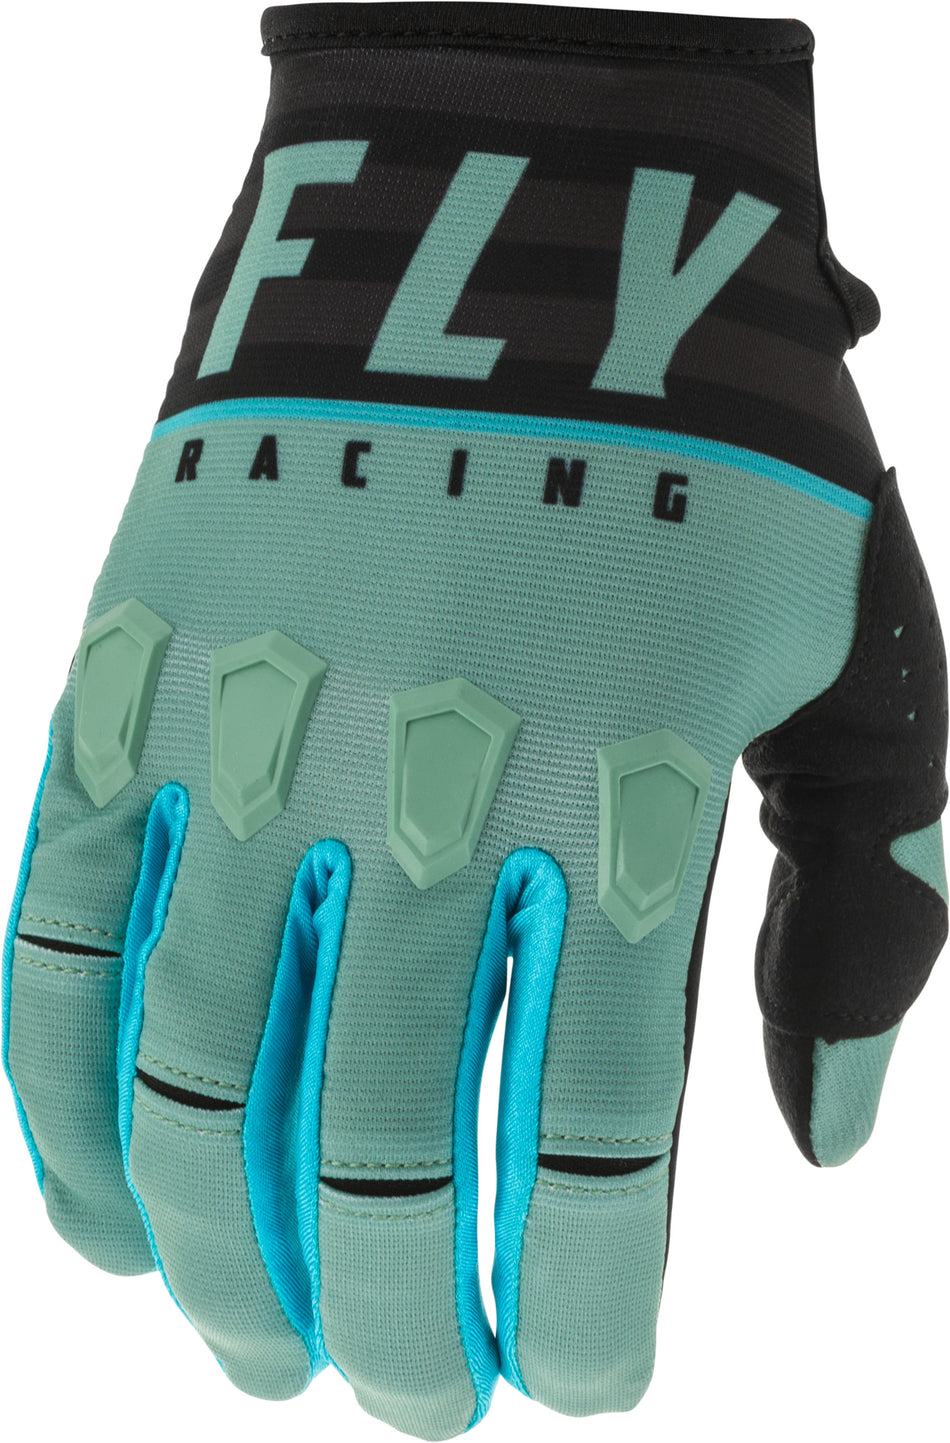 FLY RACING Kinetic K120 Gloves Sage Green/Black Sz 05 373-41605